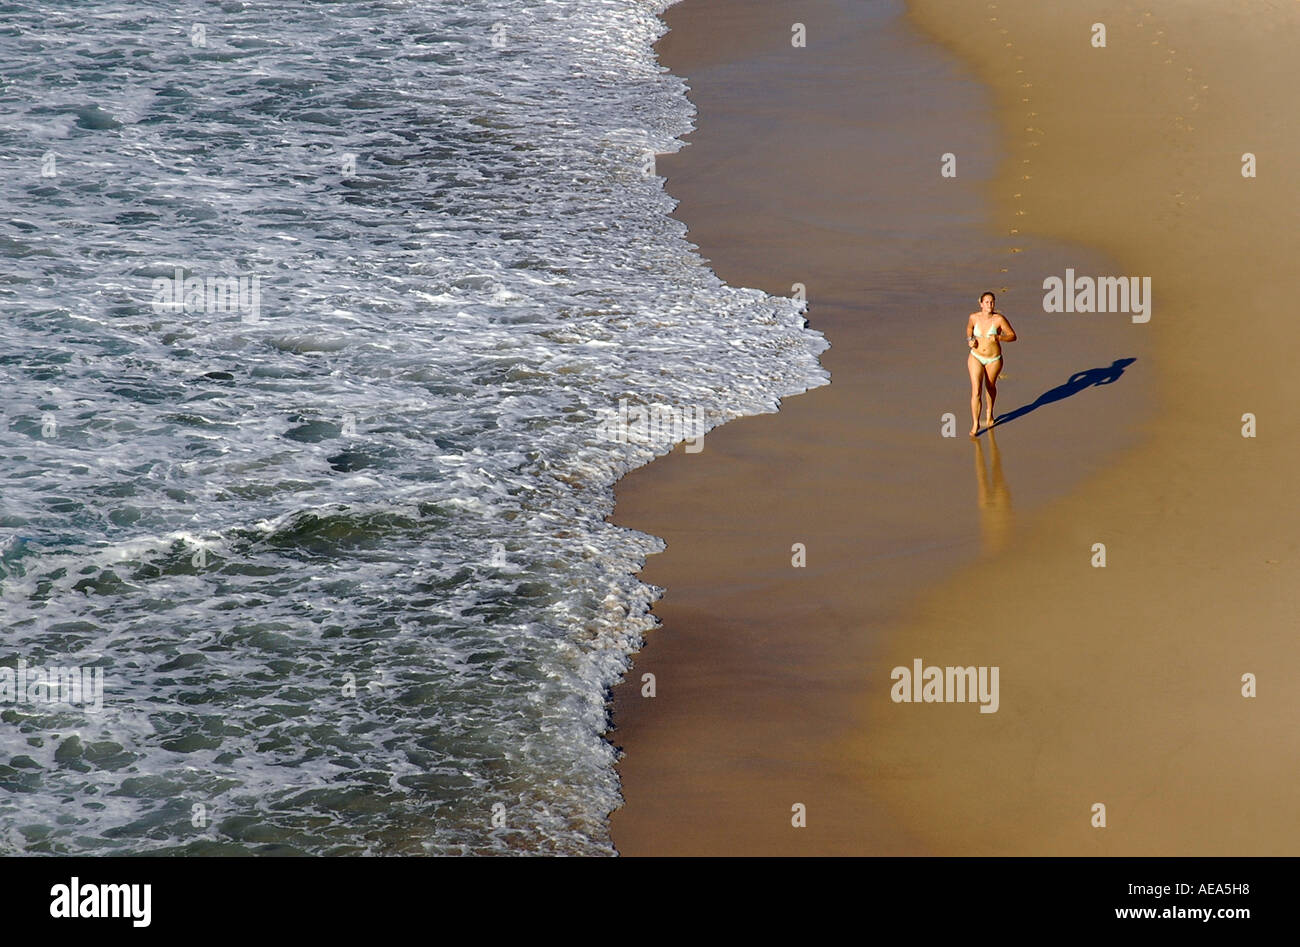 Aerial View Of A Bikini Clad Woman Jogging On Bronte Beach In Sydney